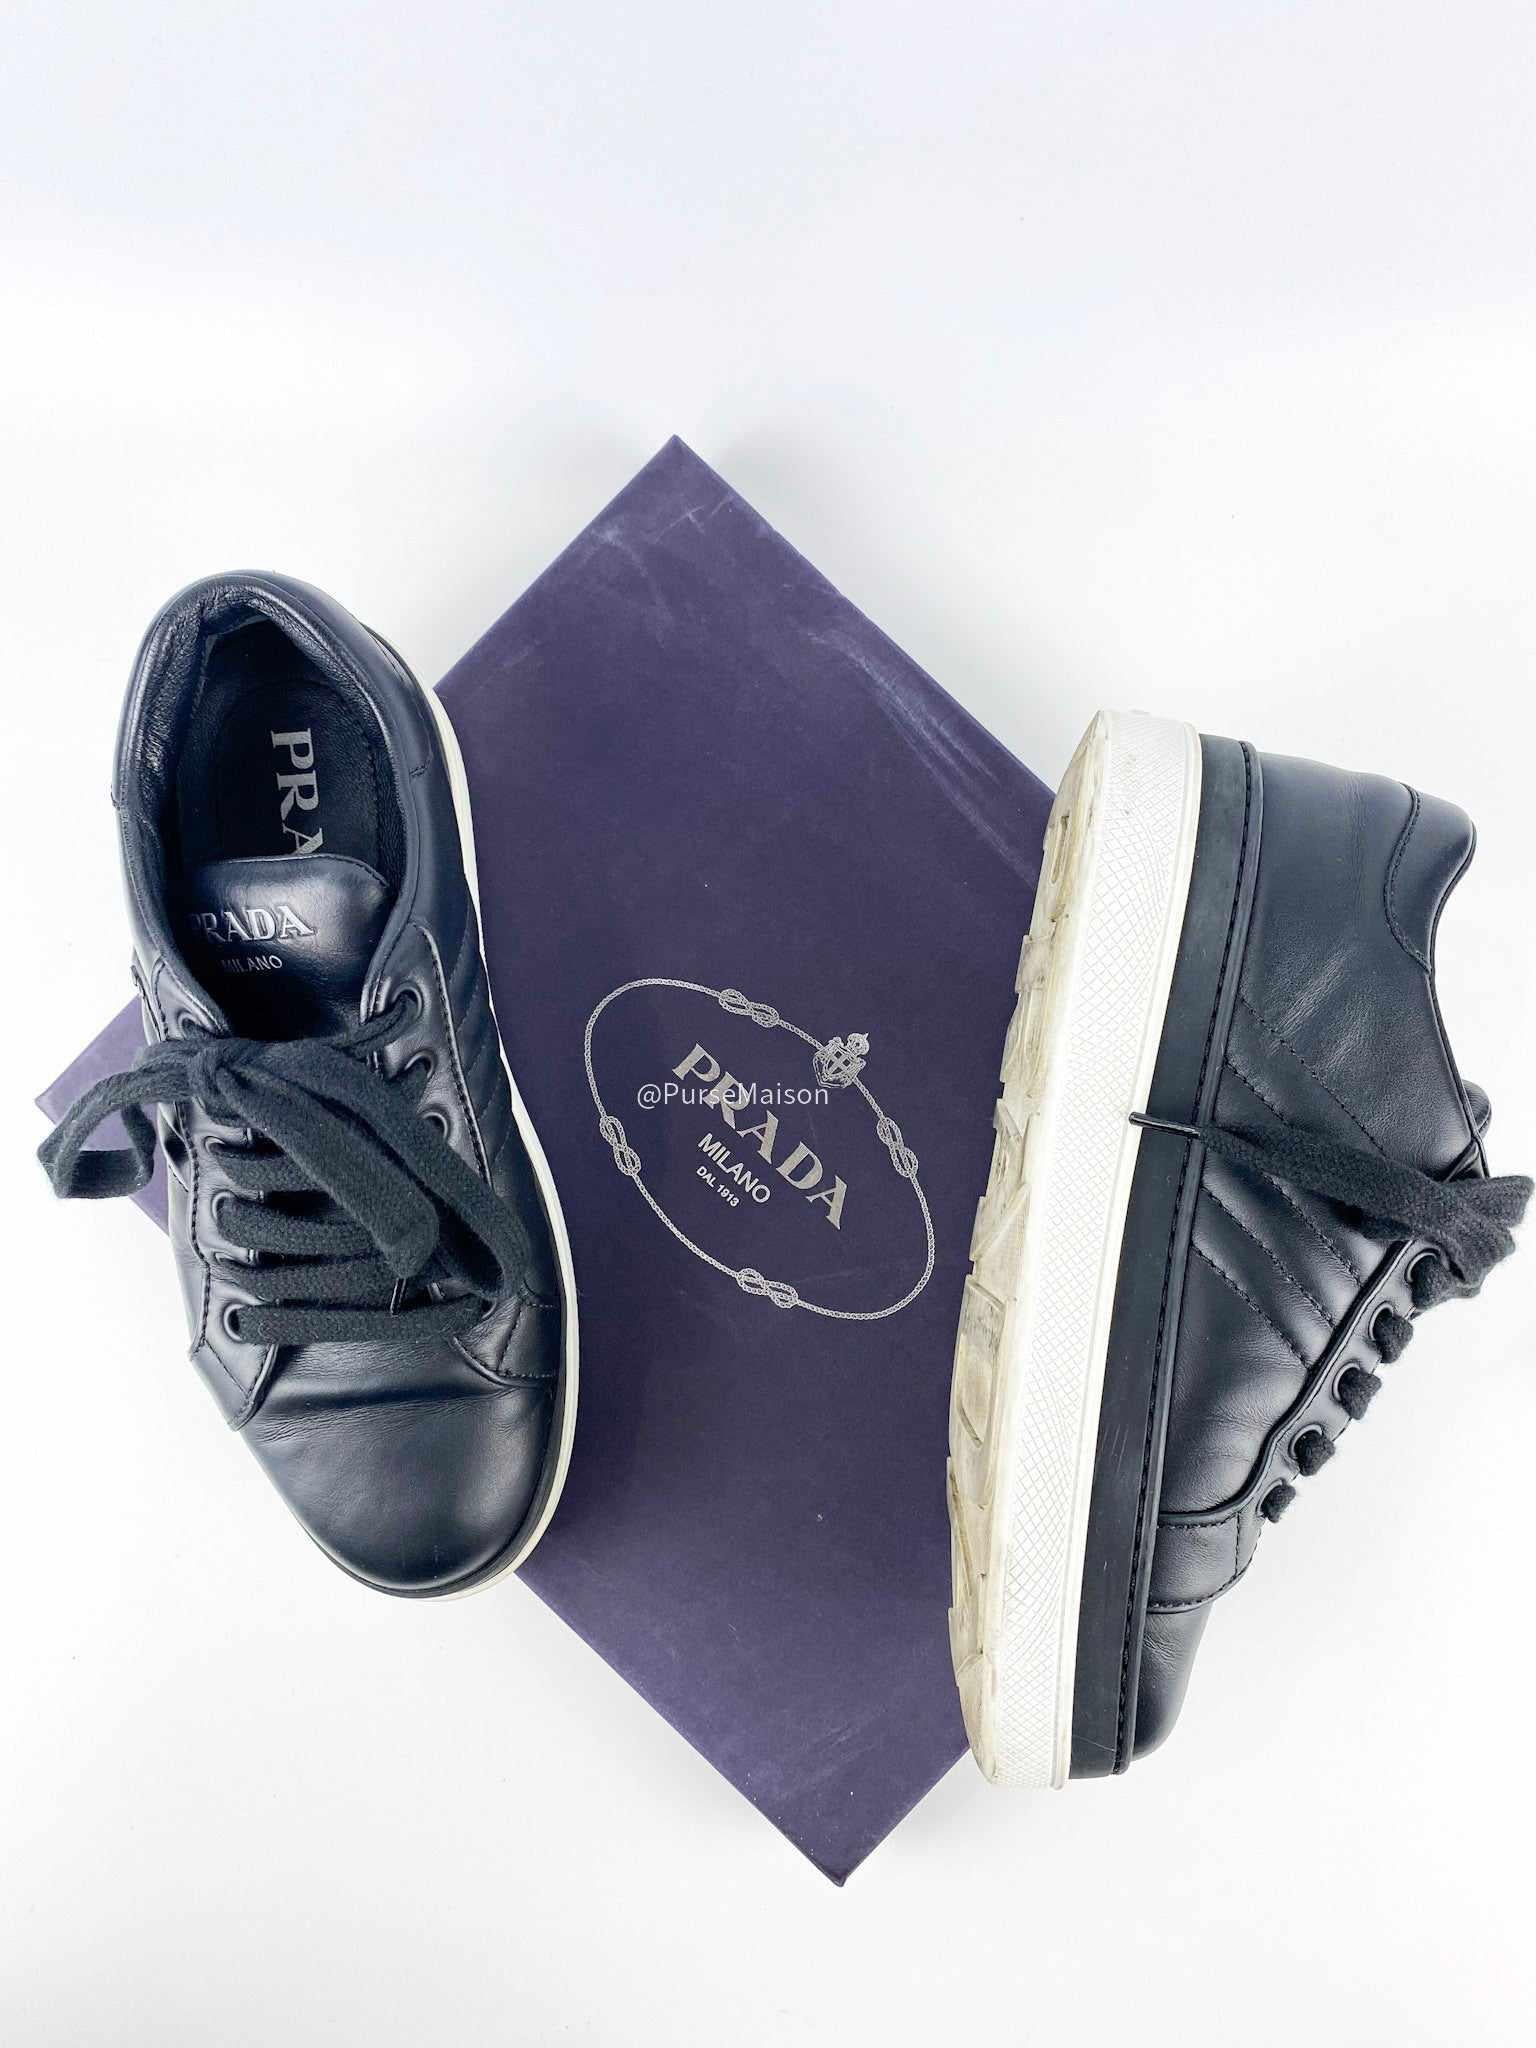 Prada Vintage Avenue Low Tops Sneakers Size 36 EU (23.5 cm)